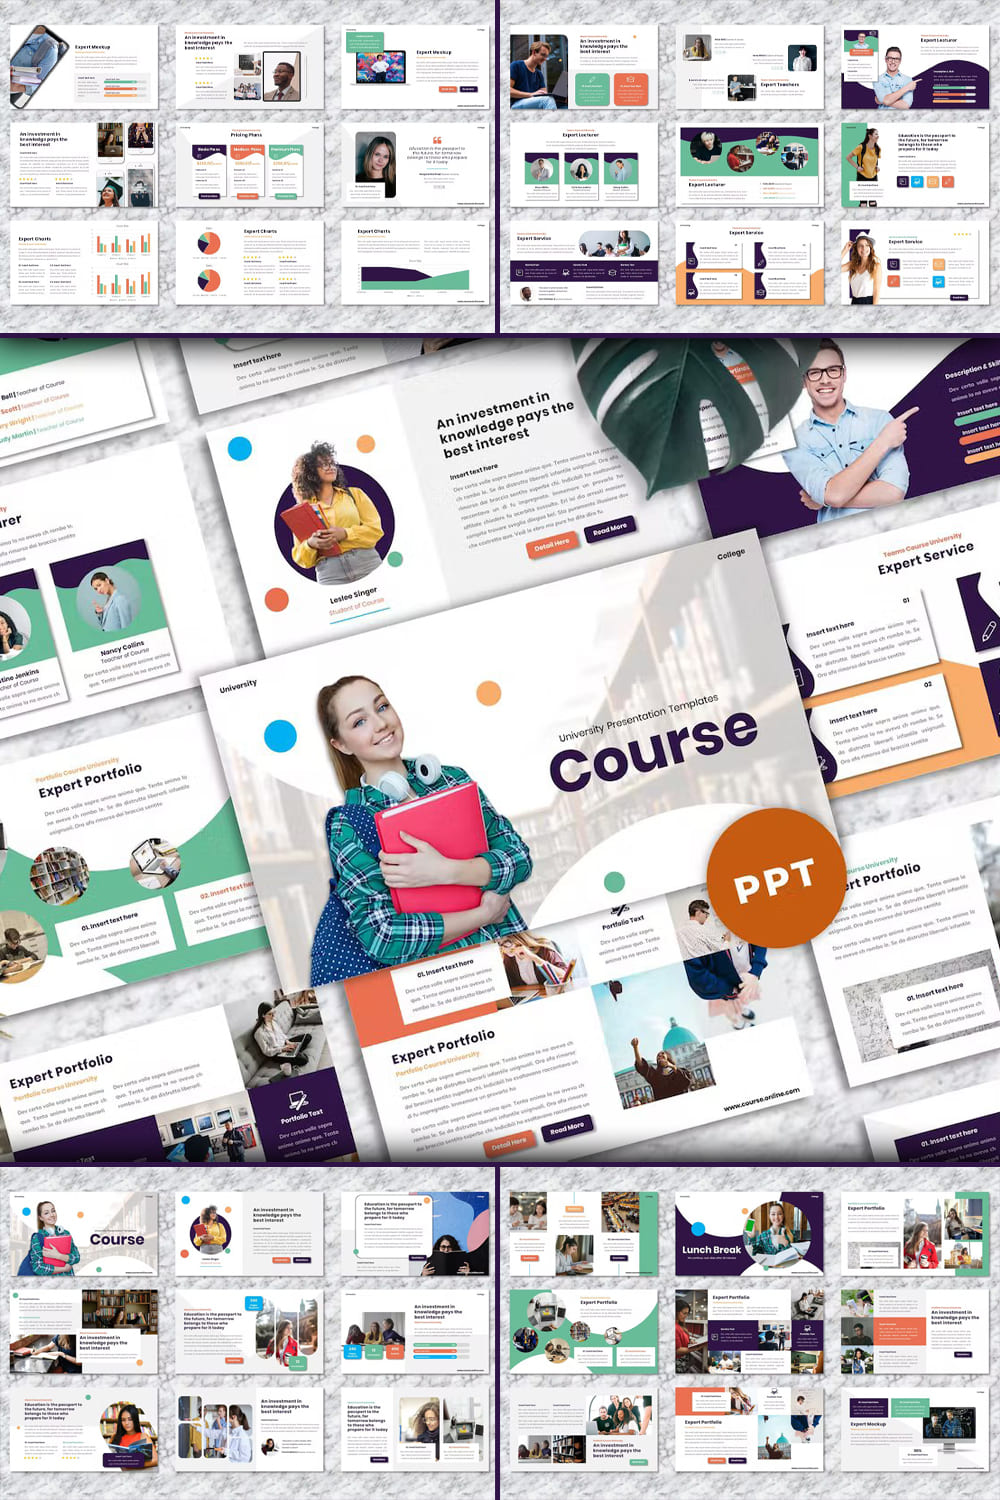 Course University Powerpoint Templates - pinterest image preview.